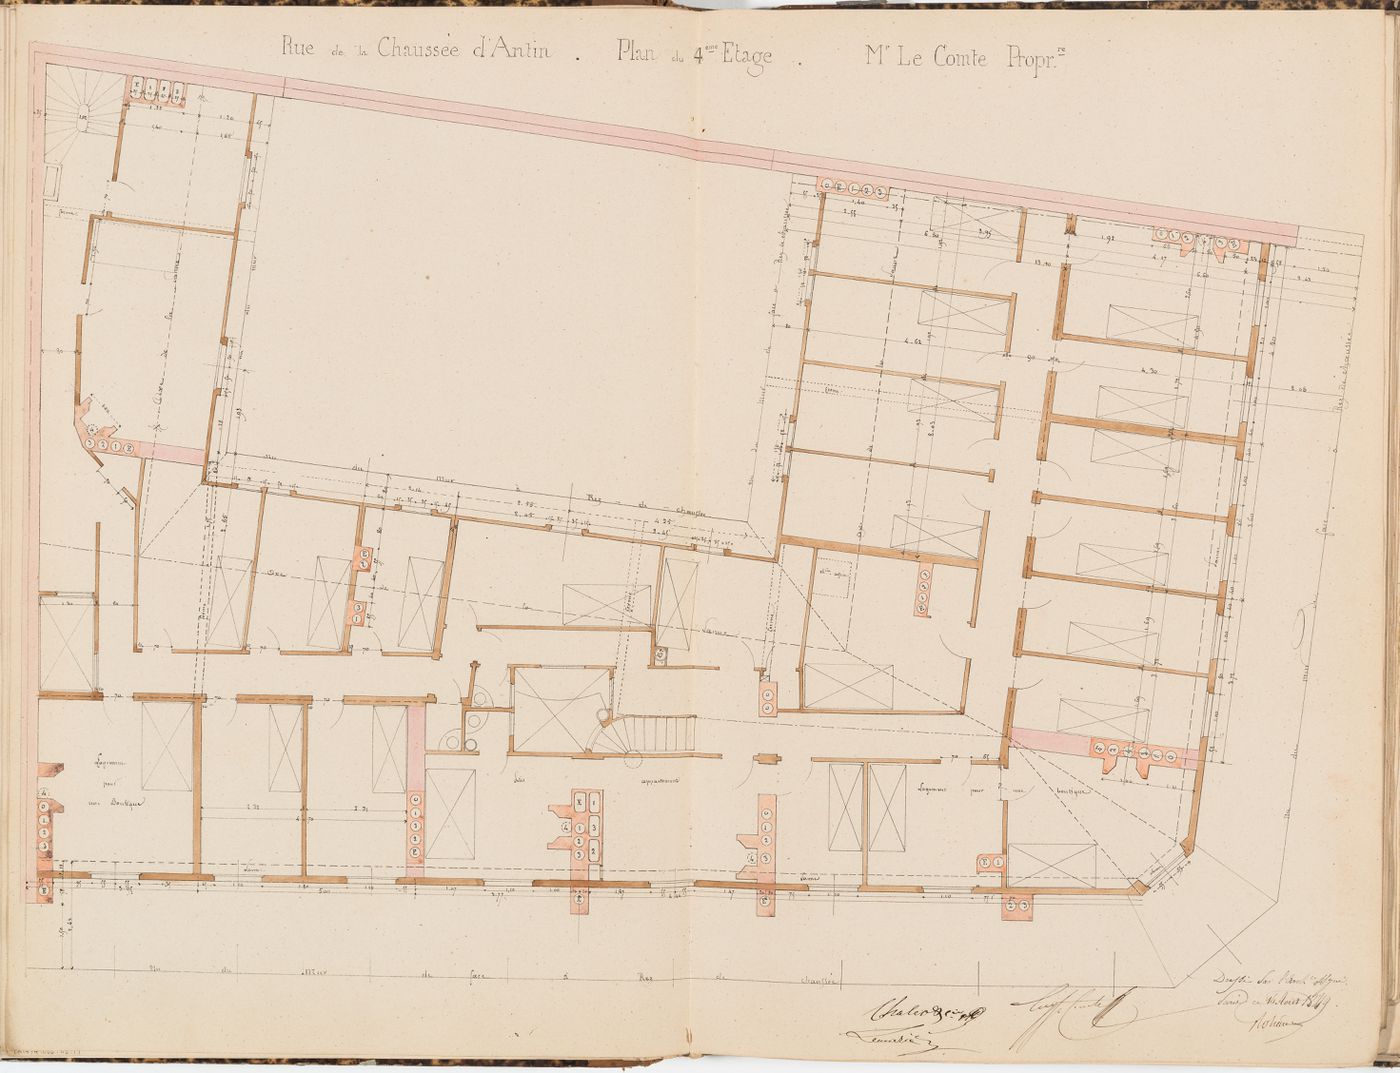 Contract drawing for an apartment house for Monsieur Le Comte, Paris: Plan for the "4e étage"